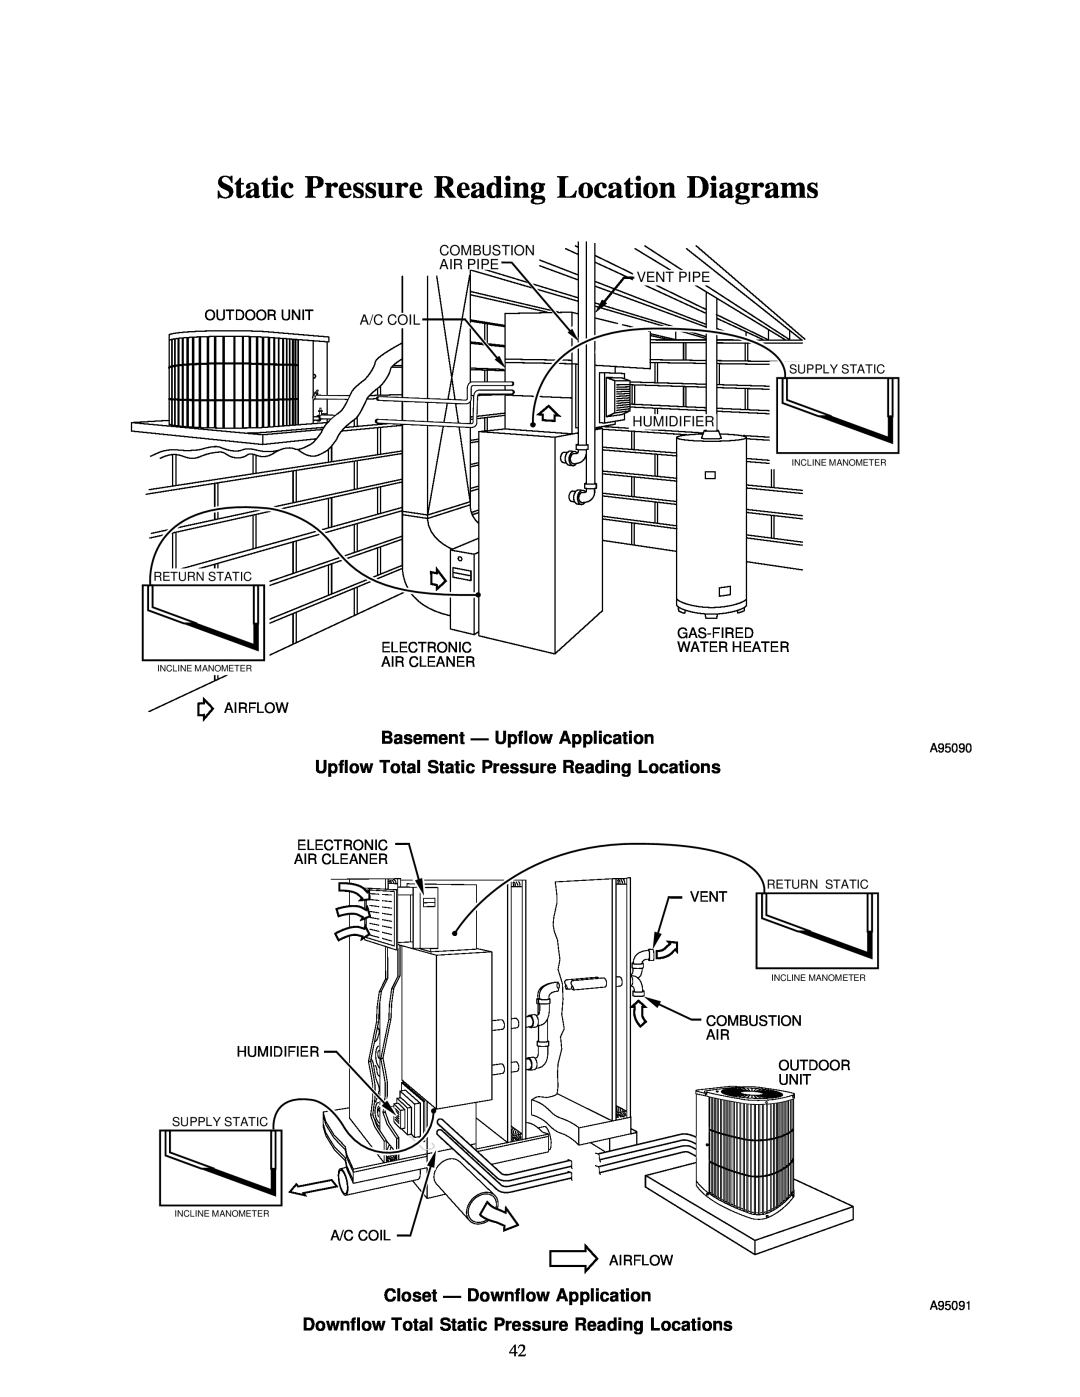 Carrier 58MVP Static Pressure Reading Location Diagrams, Basement Ð Upflow Application, Closet Ð Downflow Application 